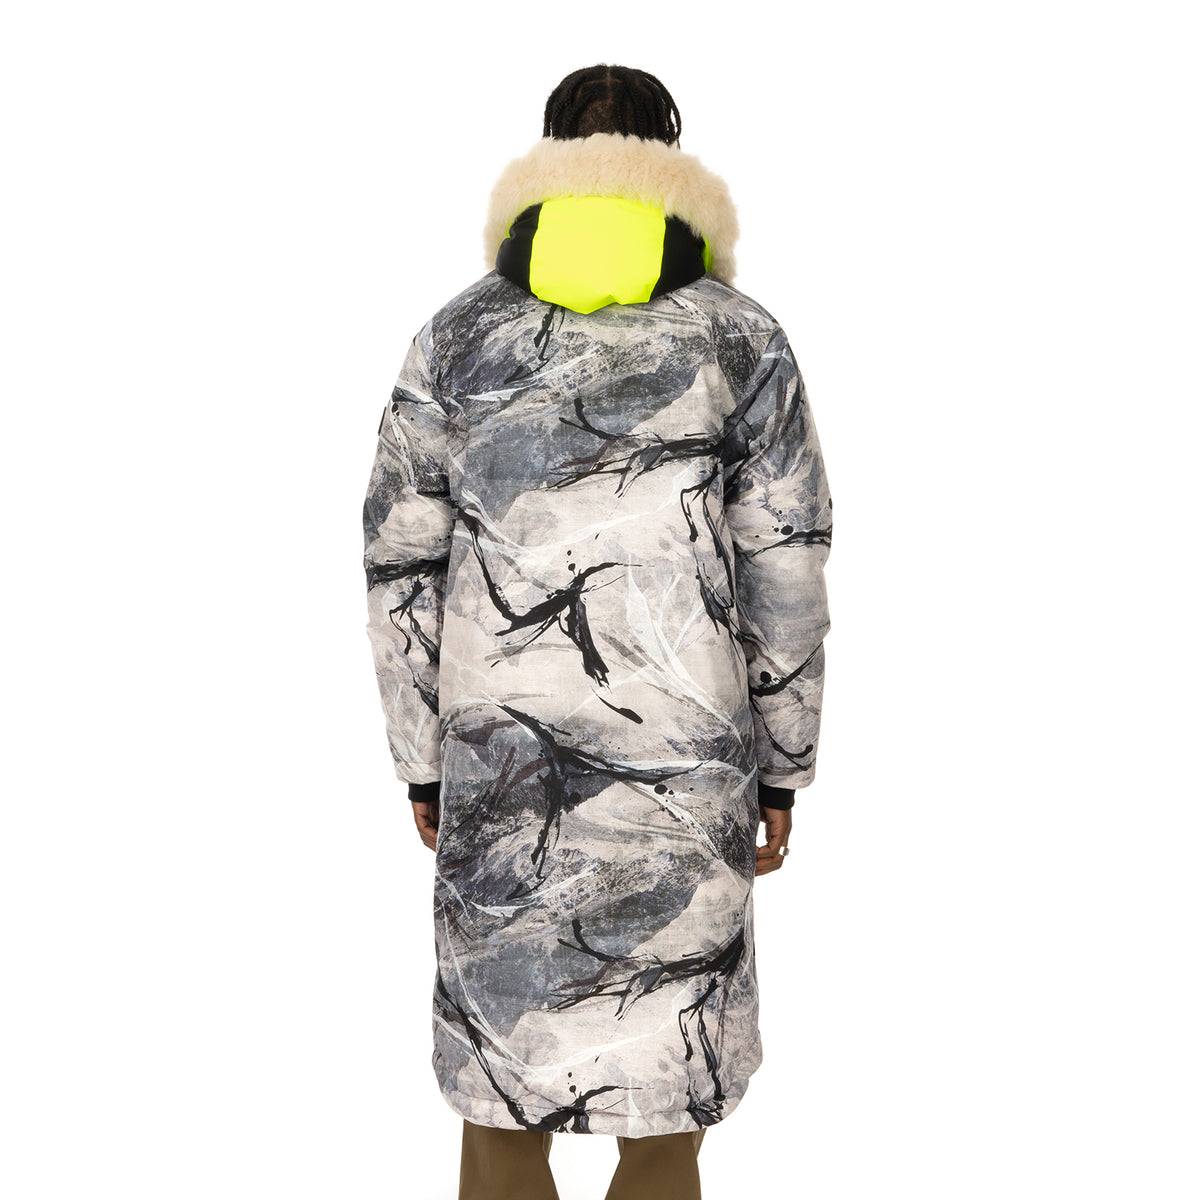 Griffin | Reversible Sleeping Bag Coat Snow Camo / Black - Concrete